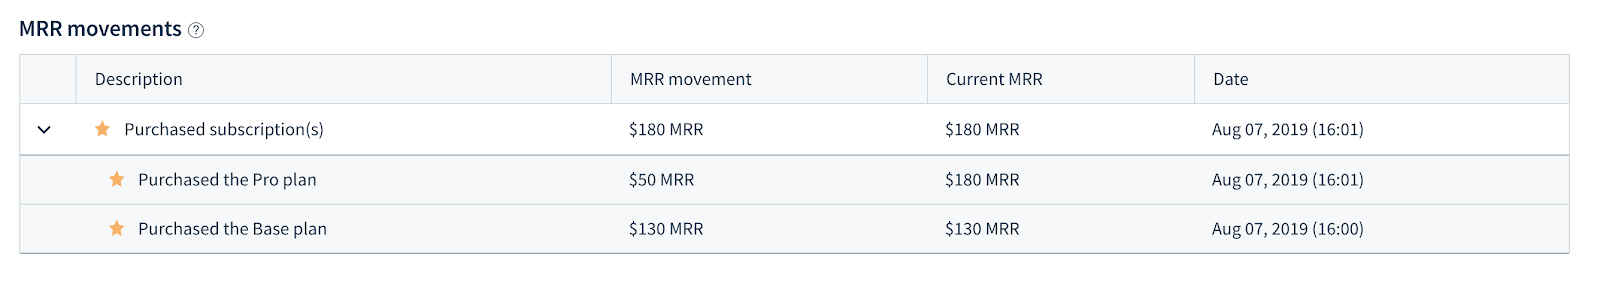 Multiple MRR movements grouped under the same newbiz event